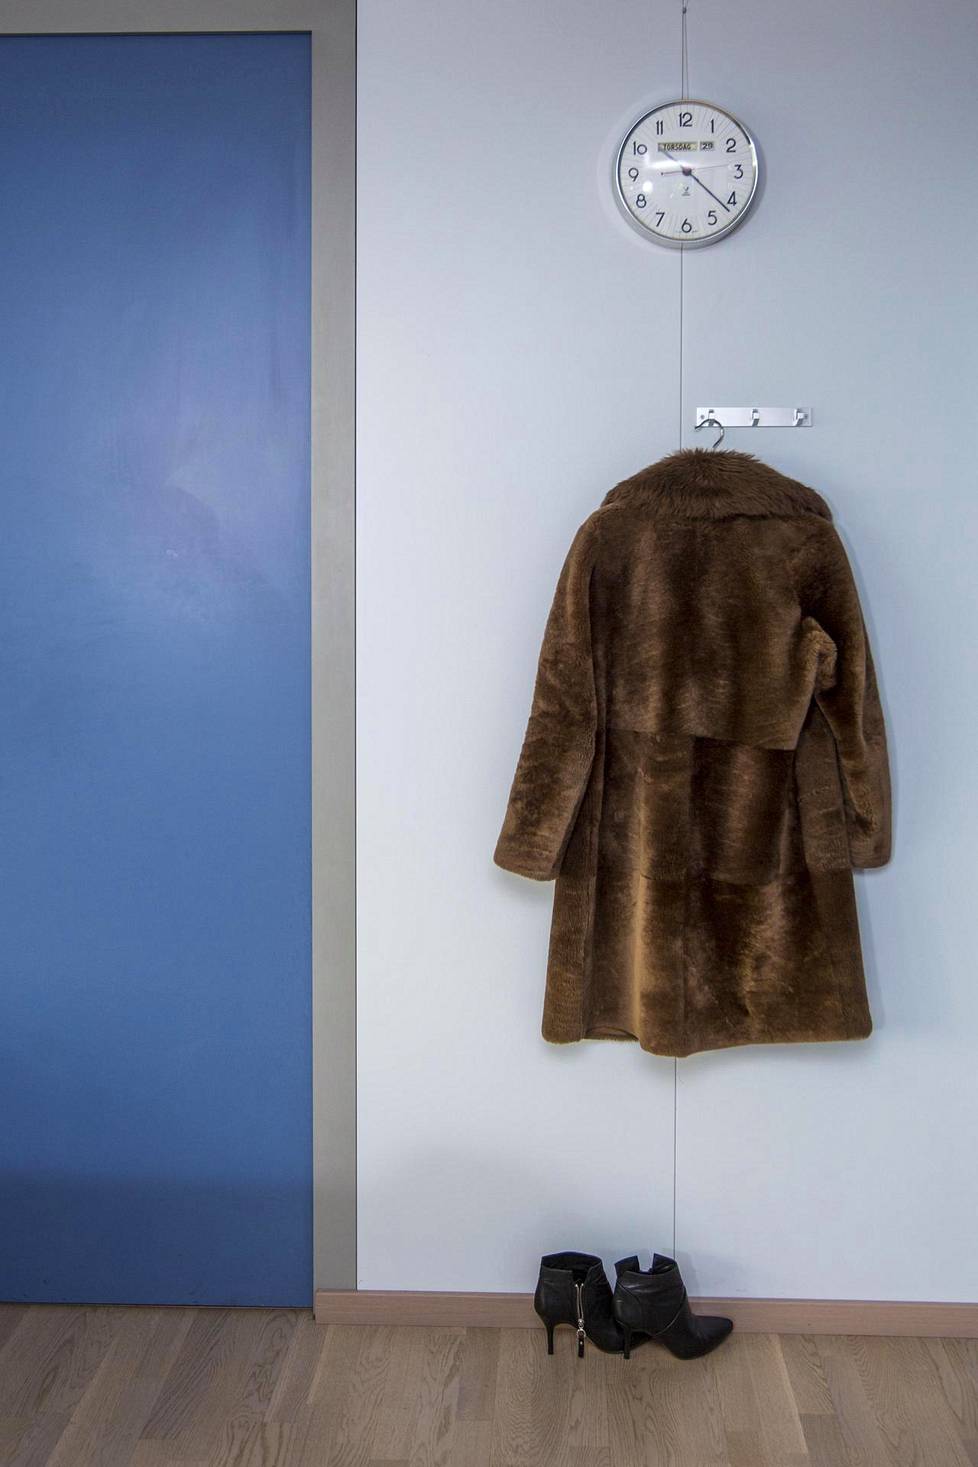 Margrethe Vestager’s coat and shoes.